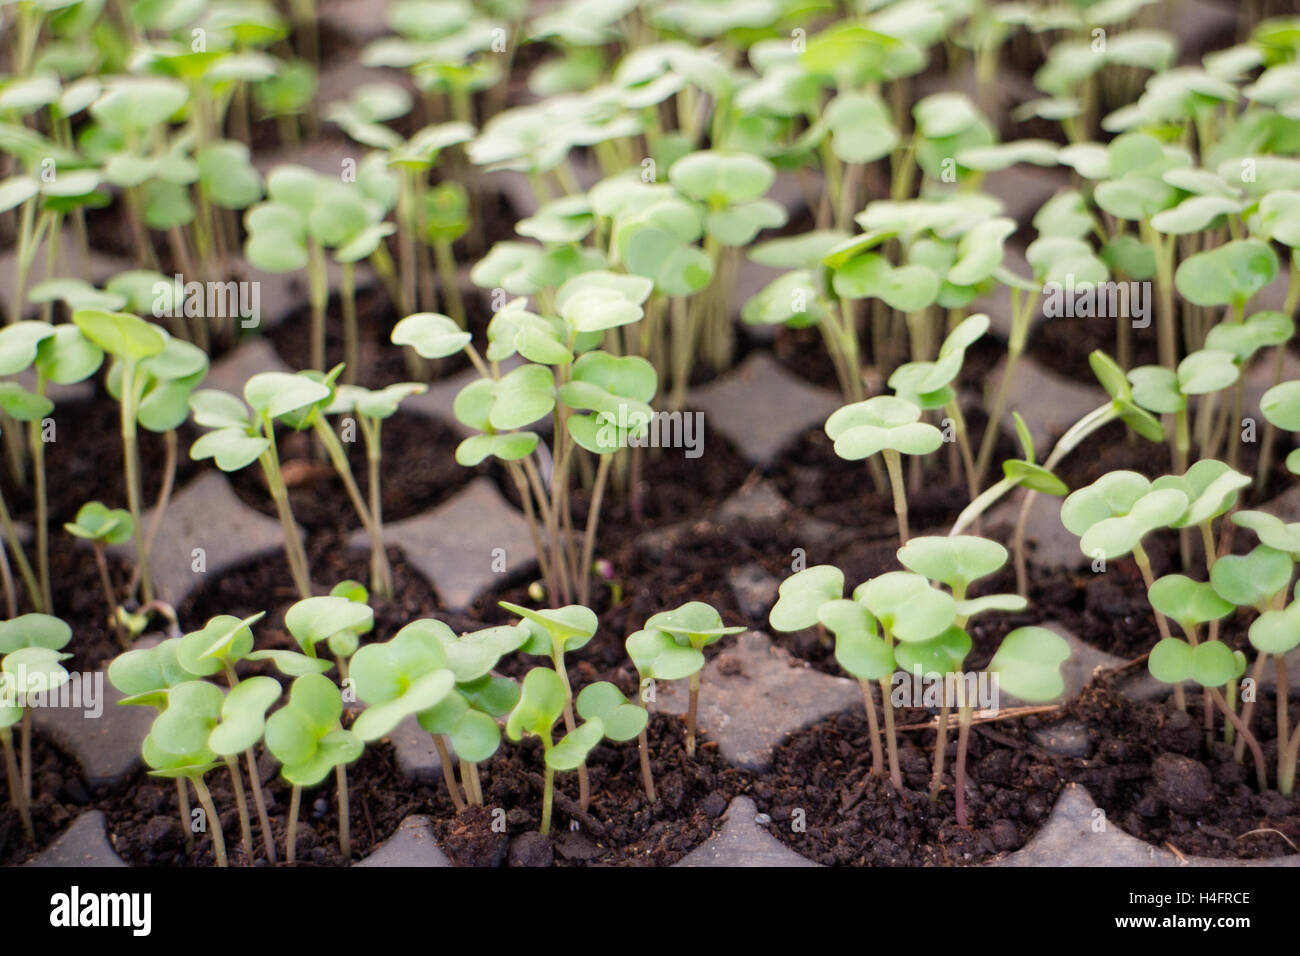 Plants growing in soil, farm inspired Stock Photo